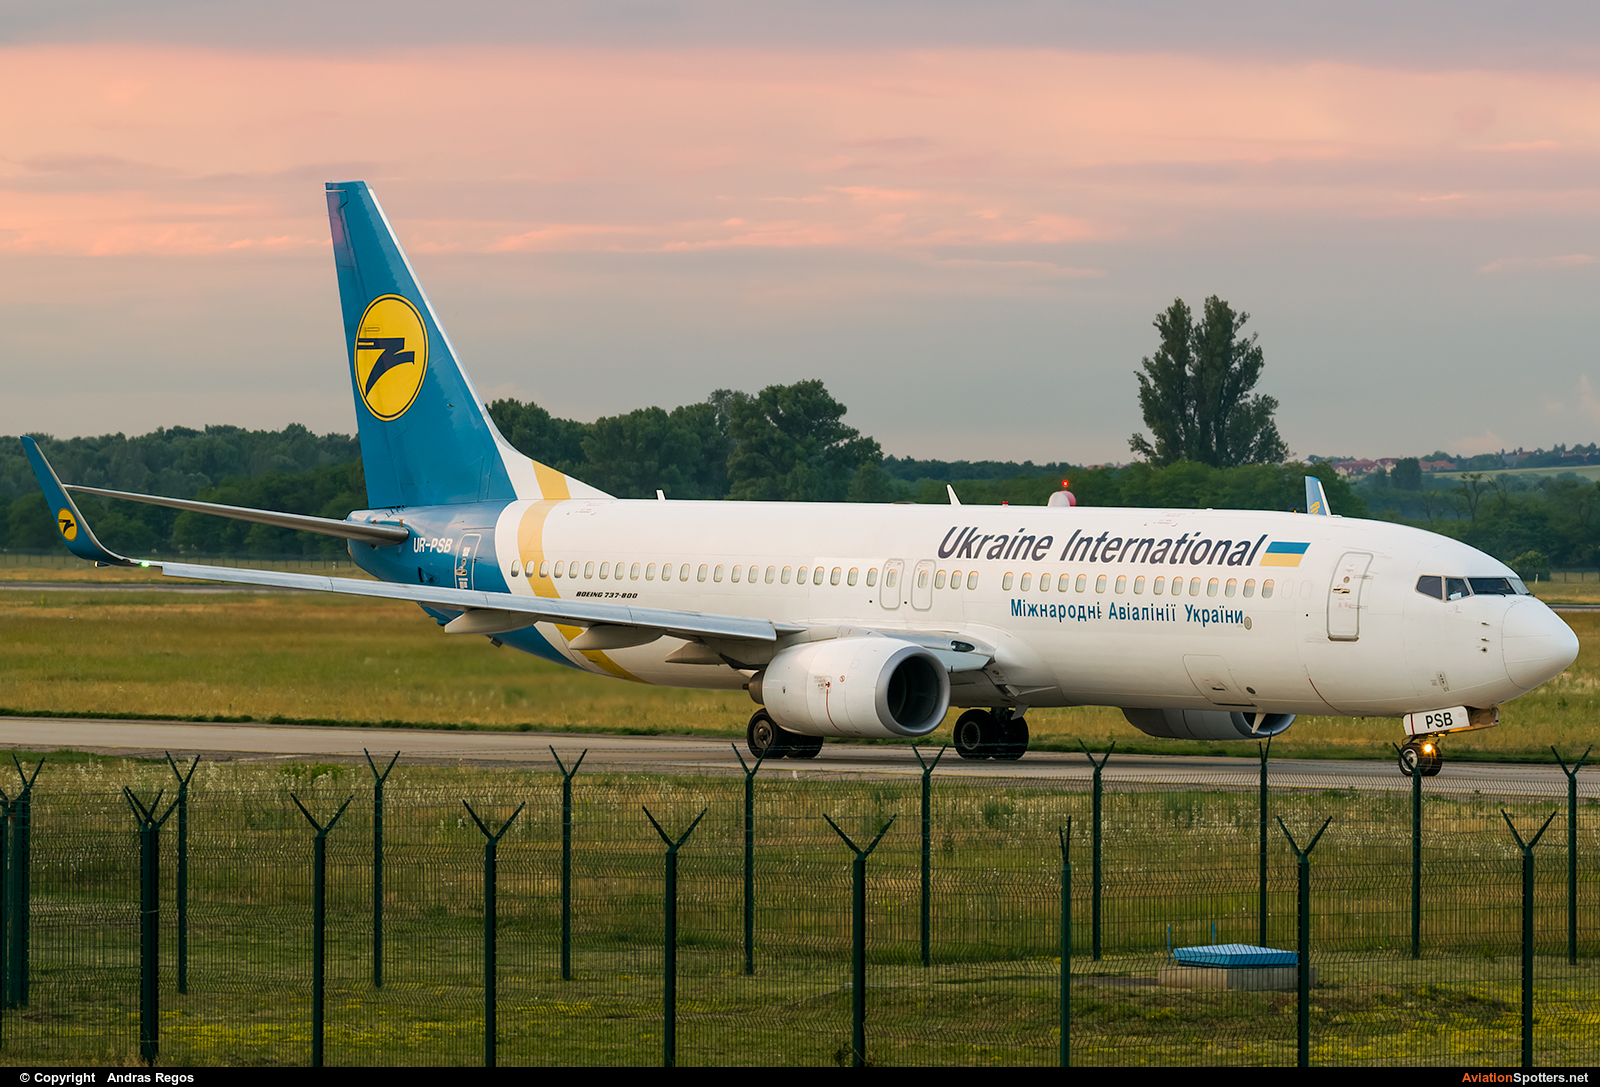 Ukraine International Airlines  -  737-800  (UR-PSB) By Andras Regos (regos)